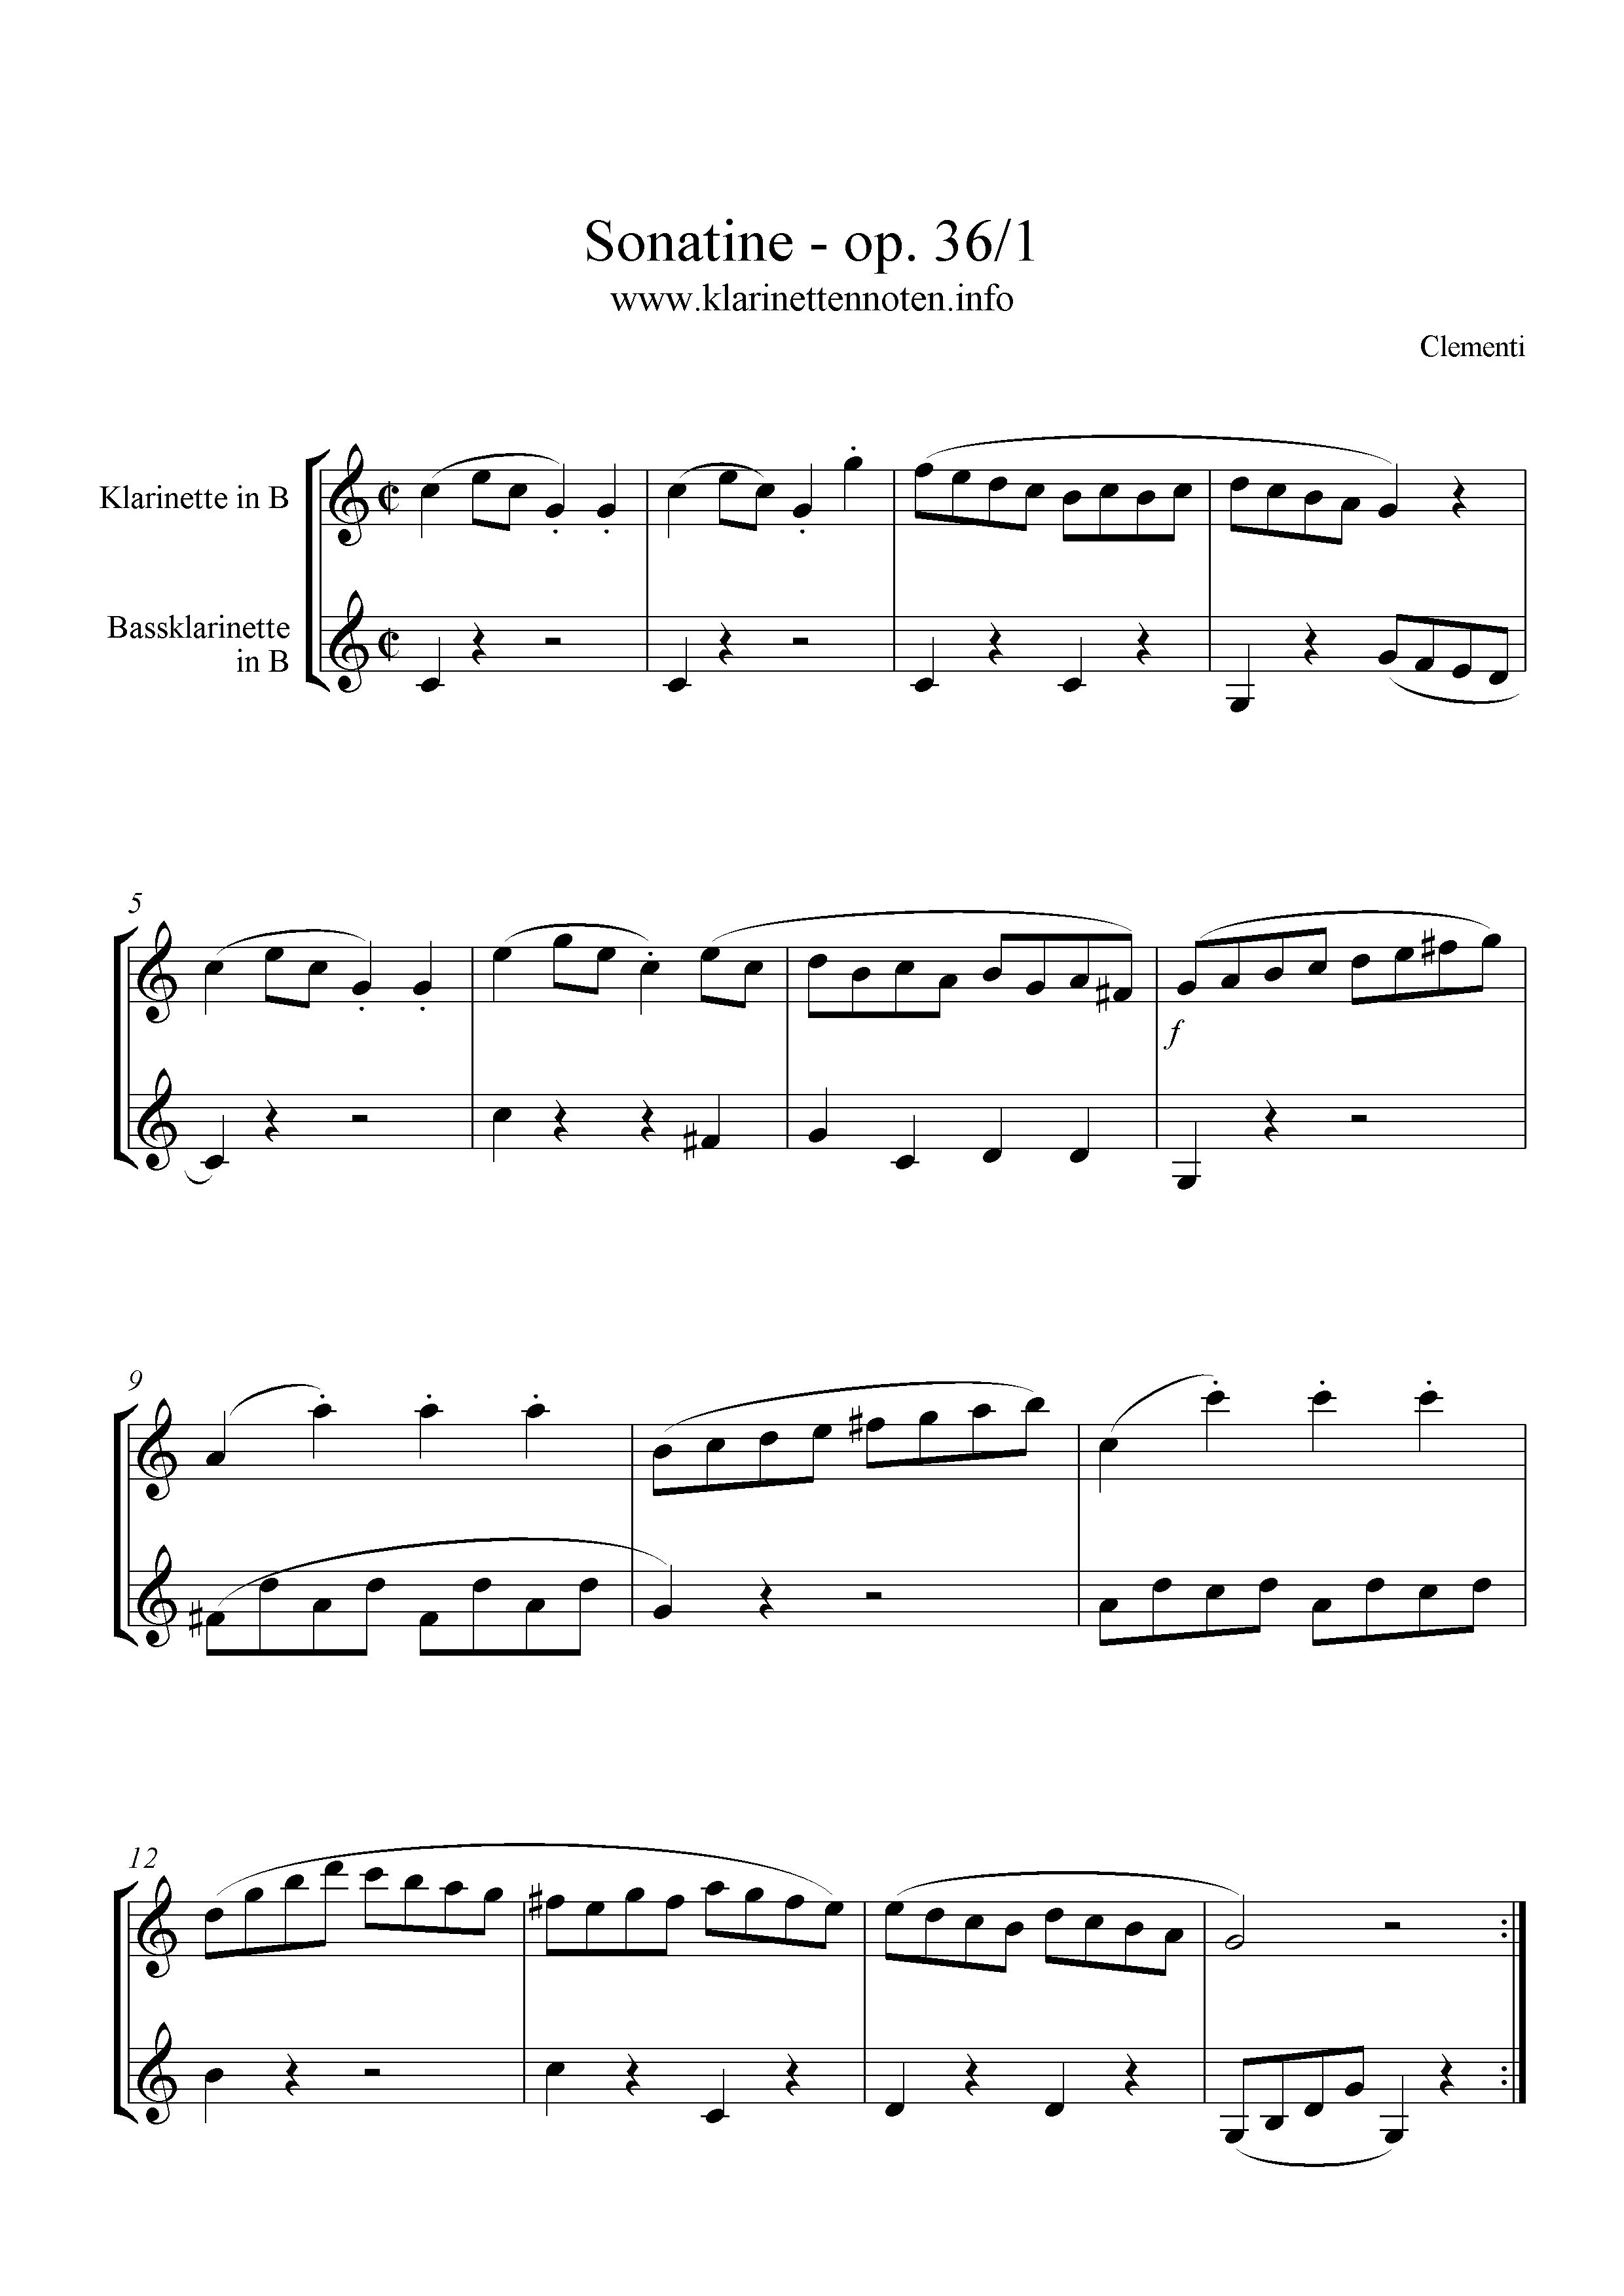 Clementi Sonatine op36/1, Clarinet Duo